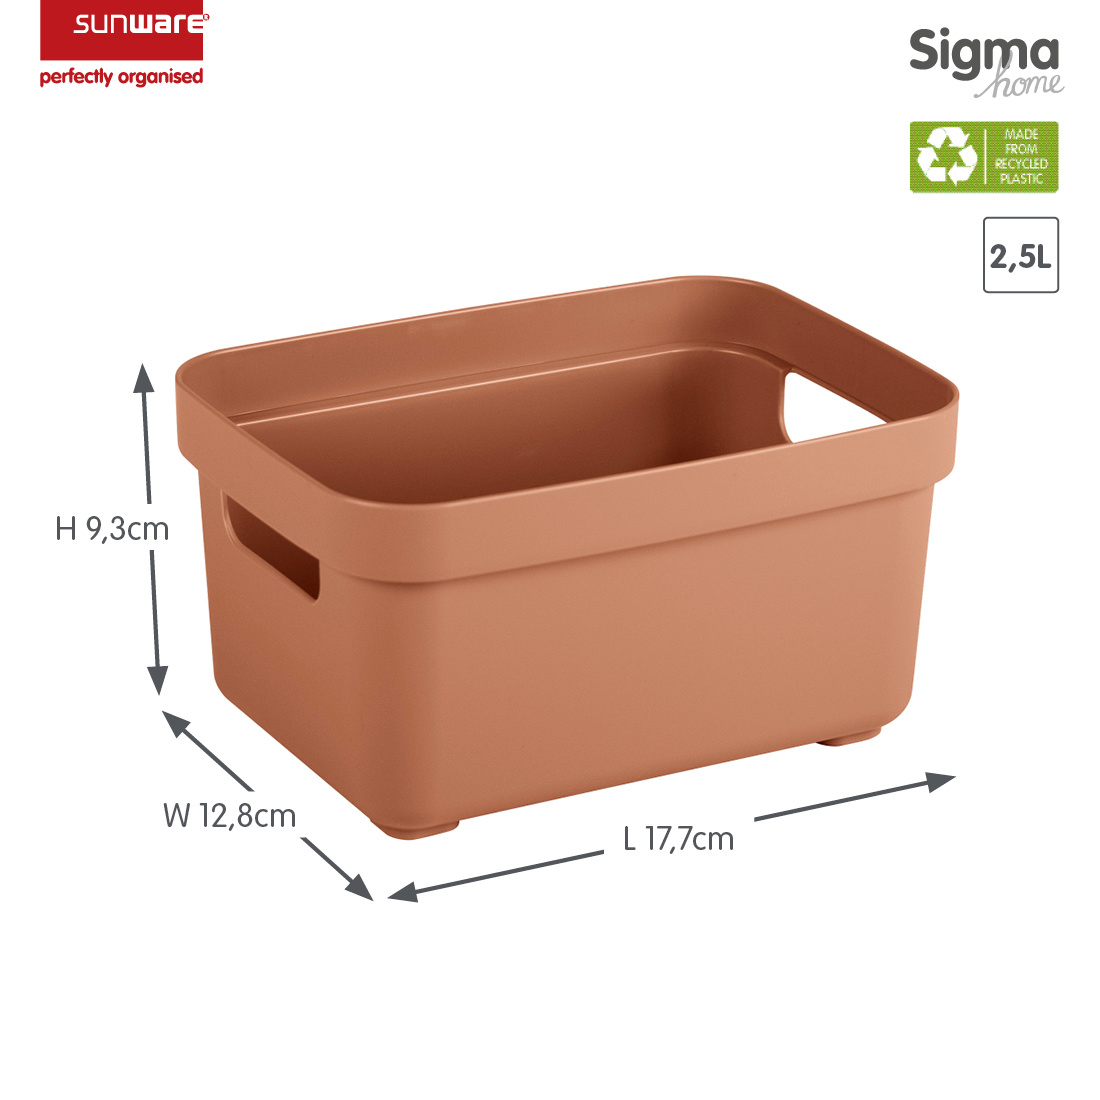 Sigma home Aufbewahrungsbox 2,5L terra